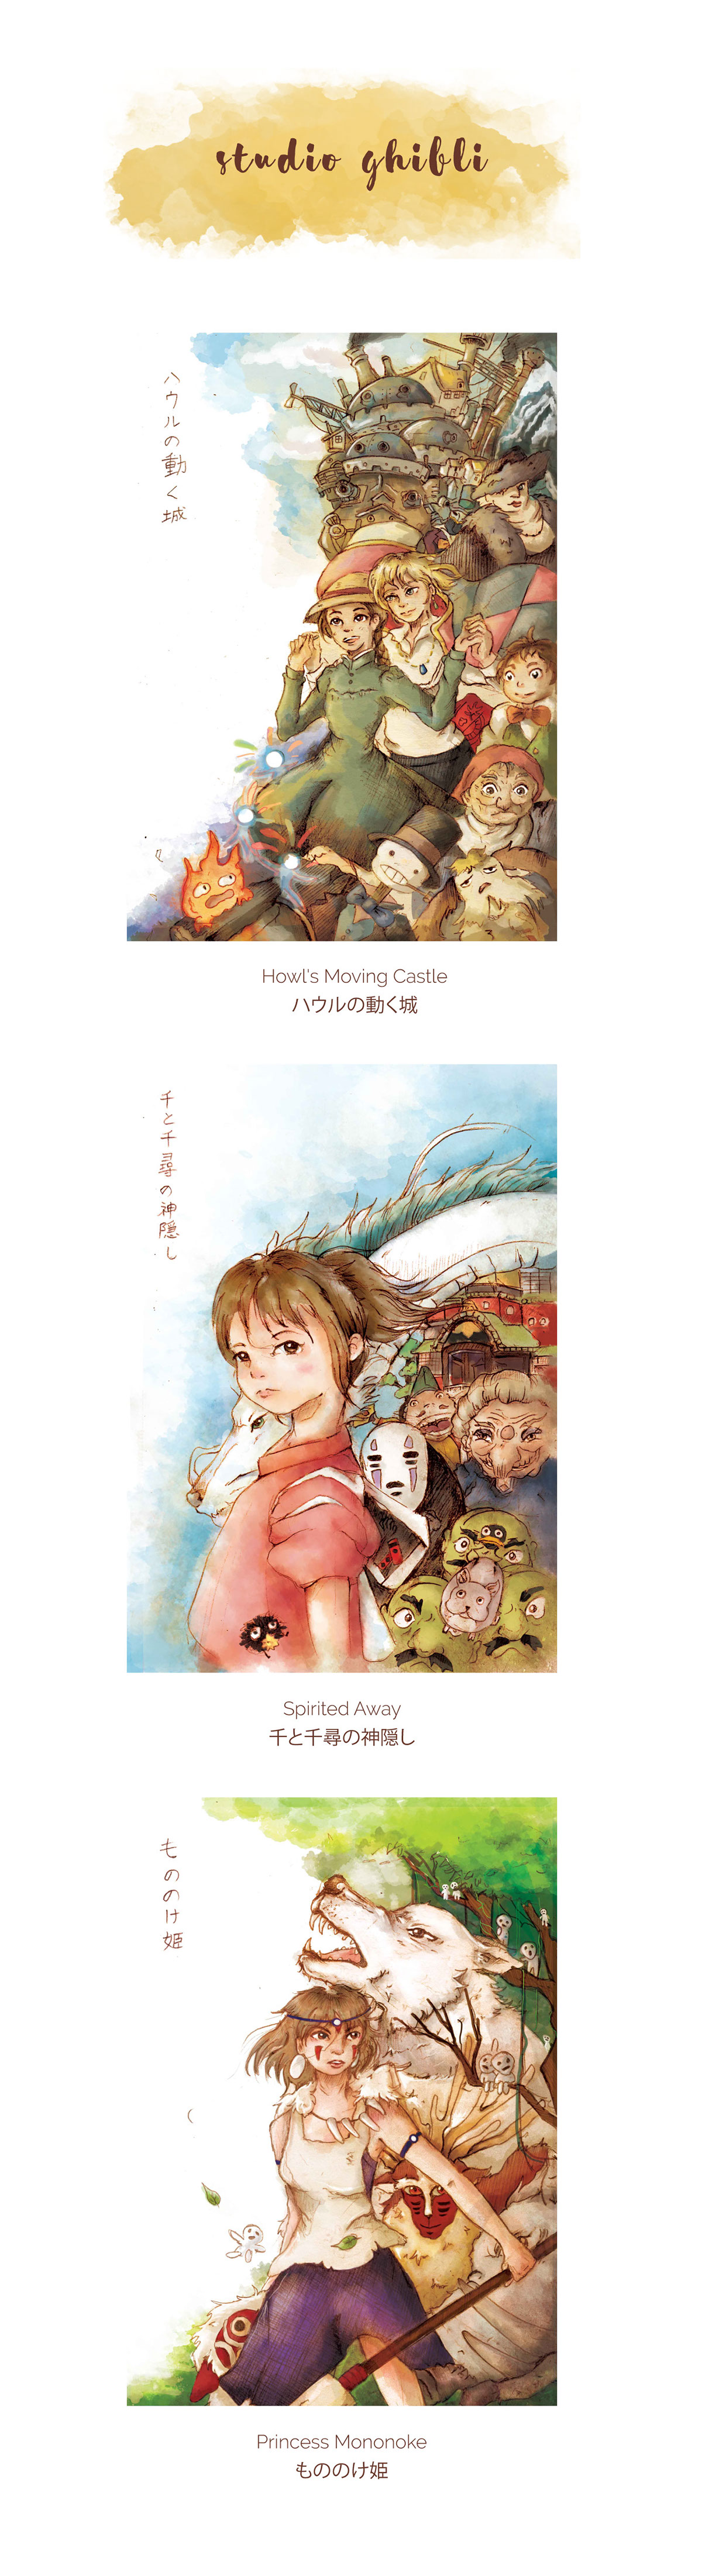 Studio Ghibli Hayao Miyazaki howl's moving castle Spirited Away princess mononoke mononoke hime ハウルの動く城 千と千尋の神隠し もののけ姫 スタジオジブリ 宮崎 駿 prints